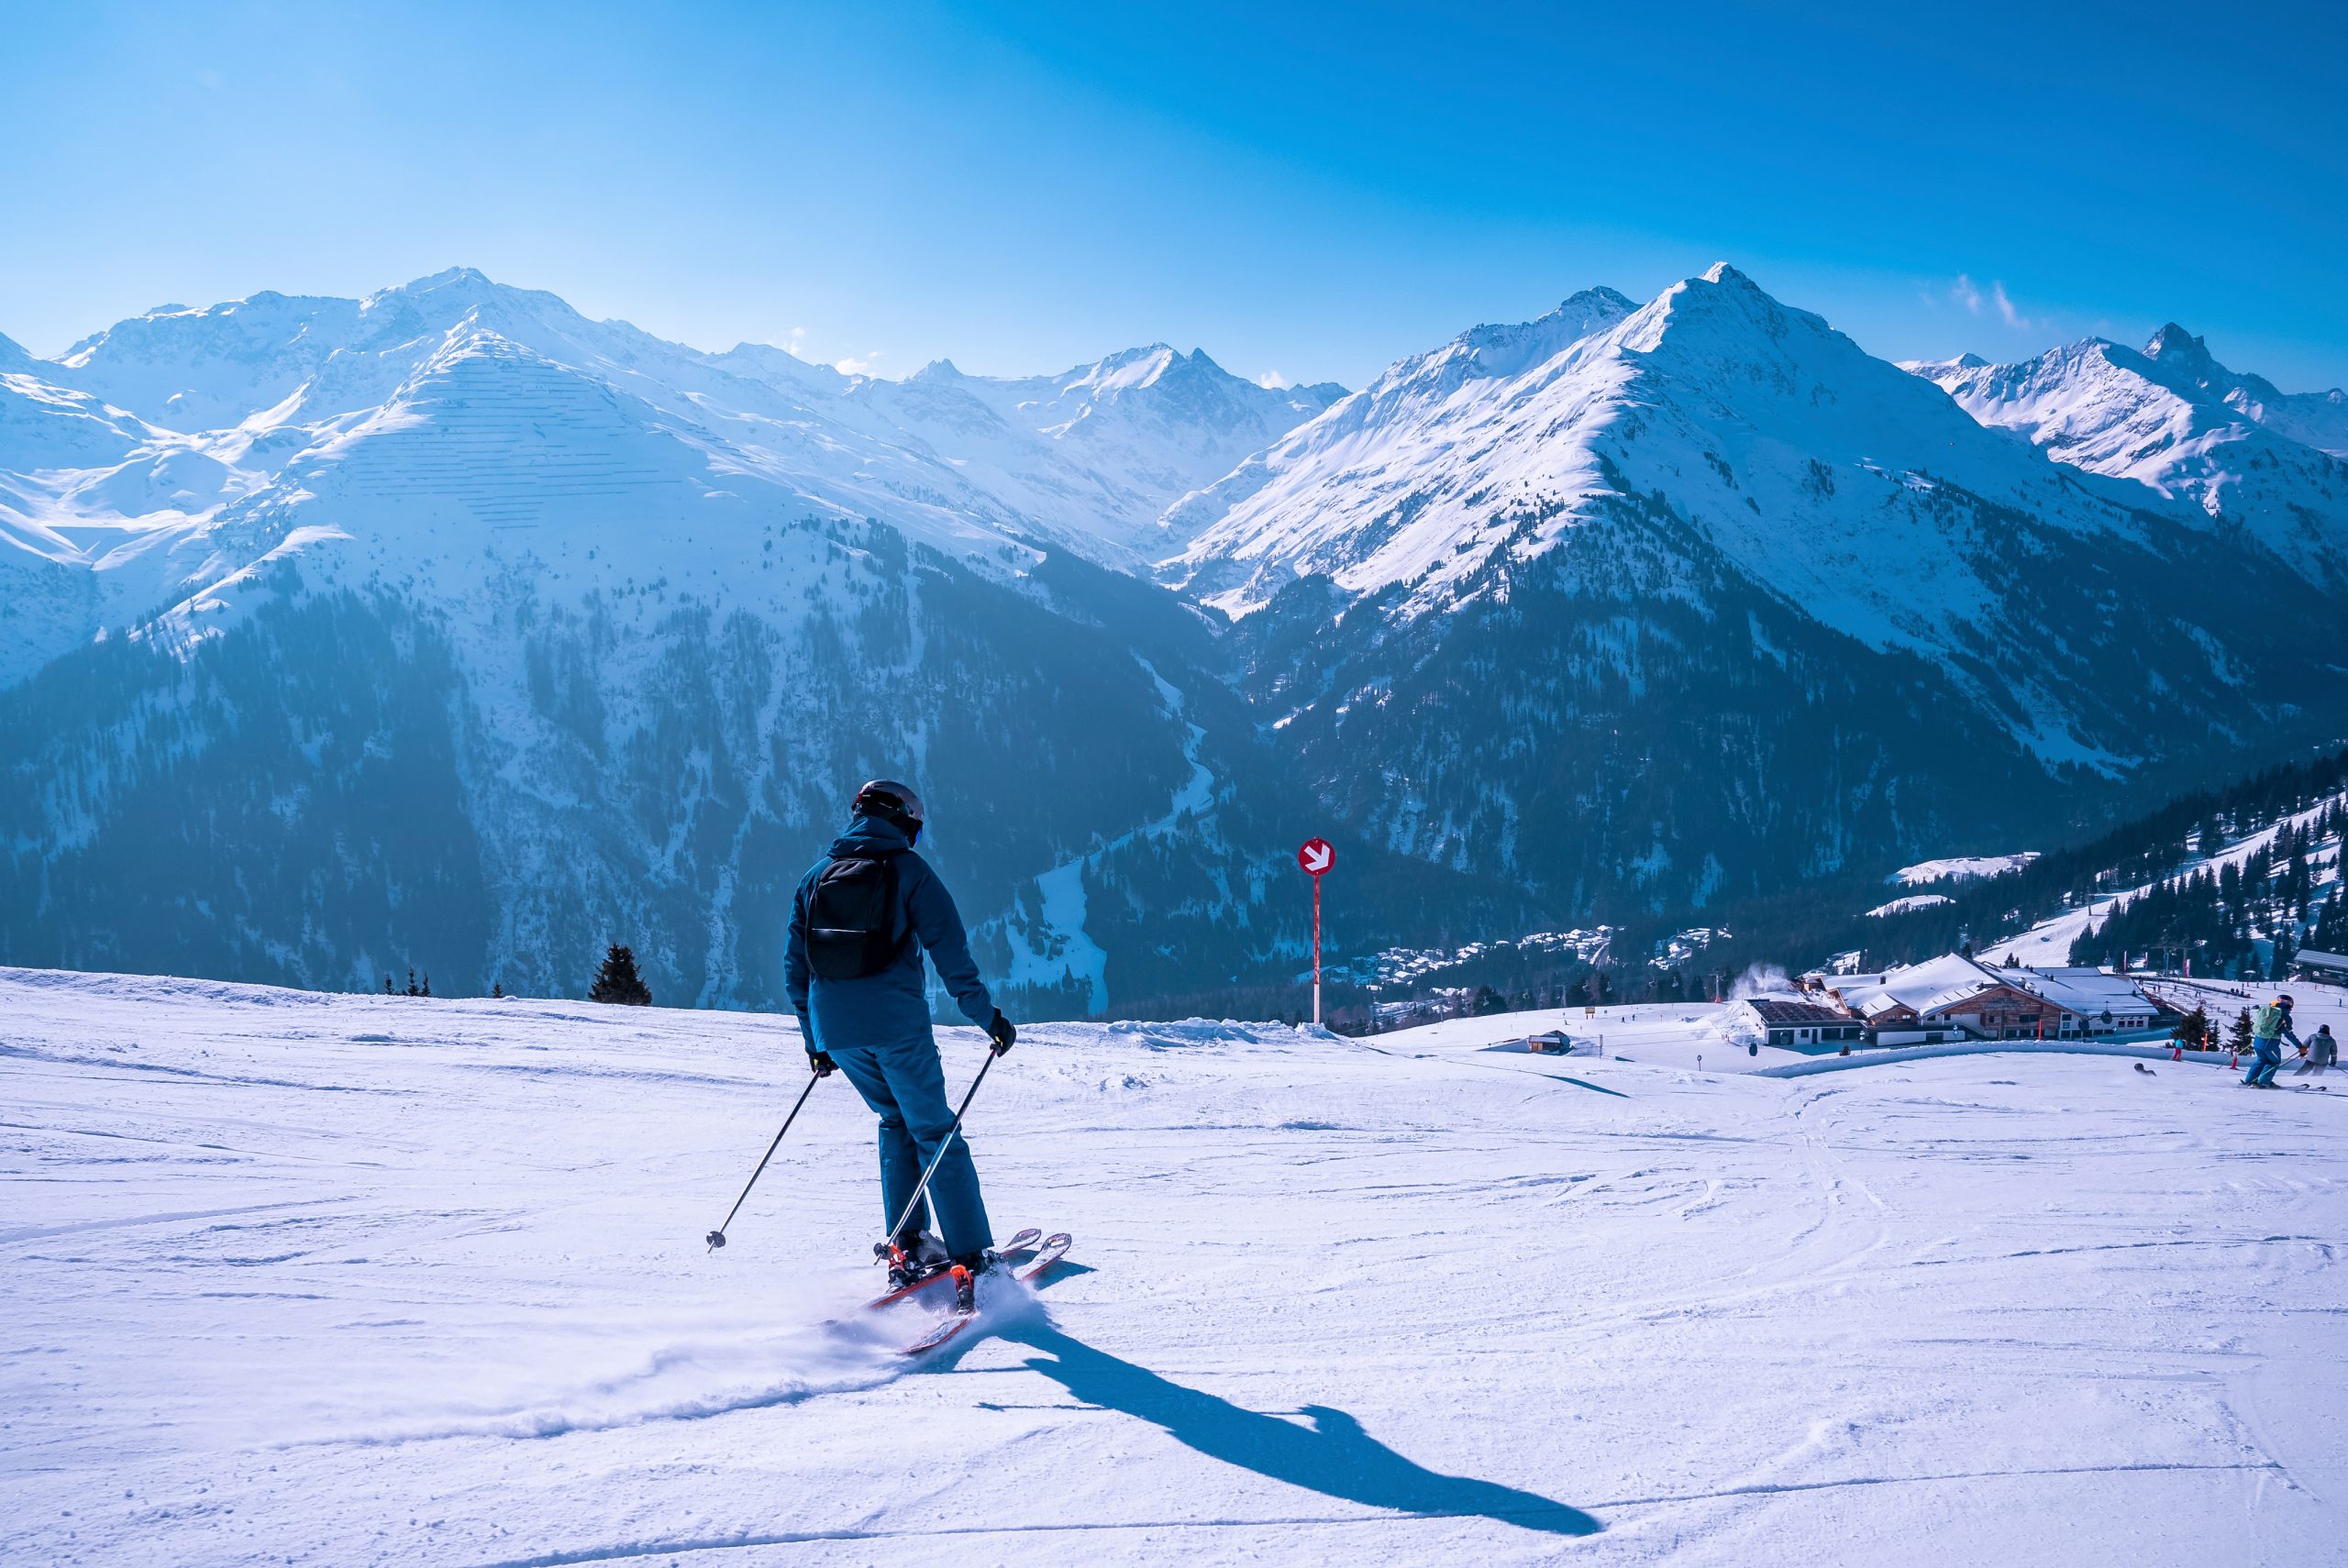 Male skier skiing on snowy landscape against mountain range